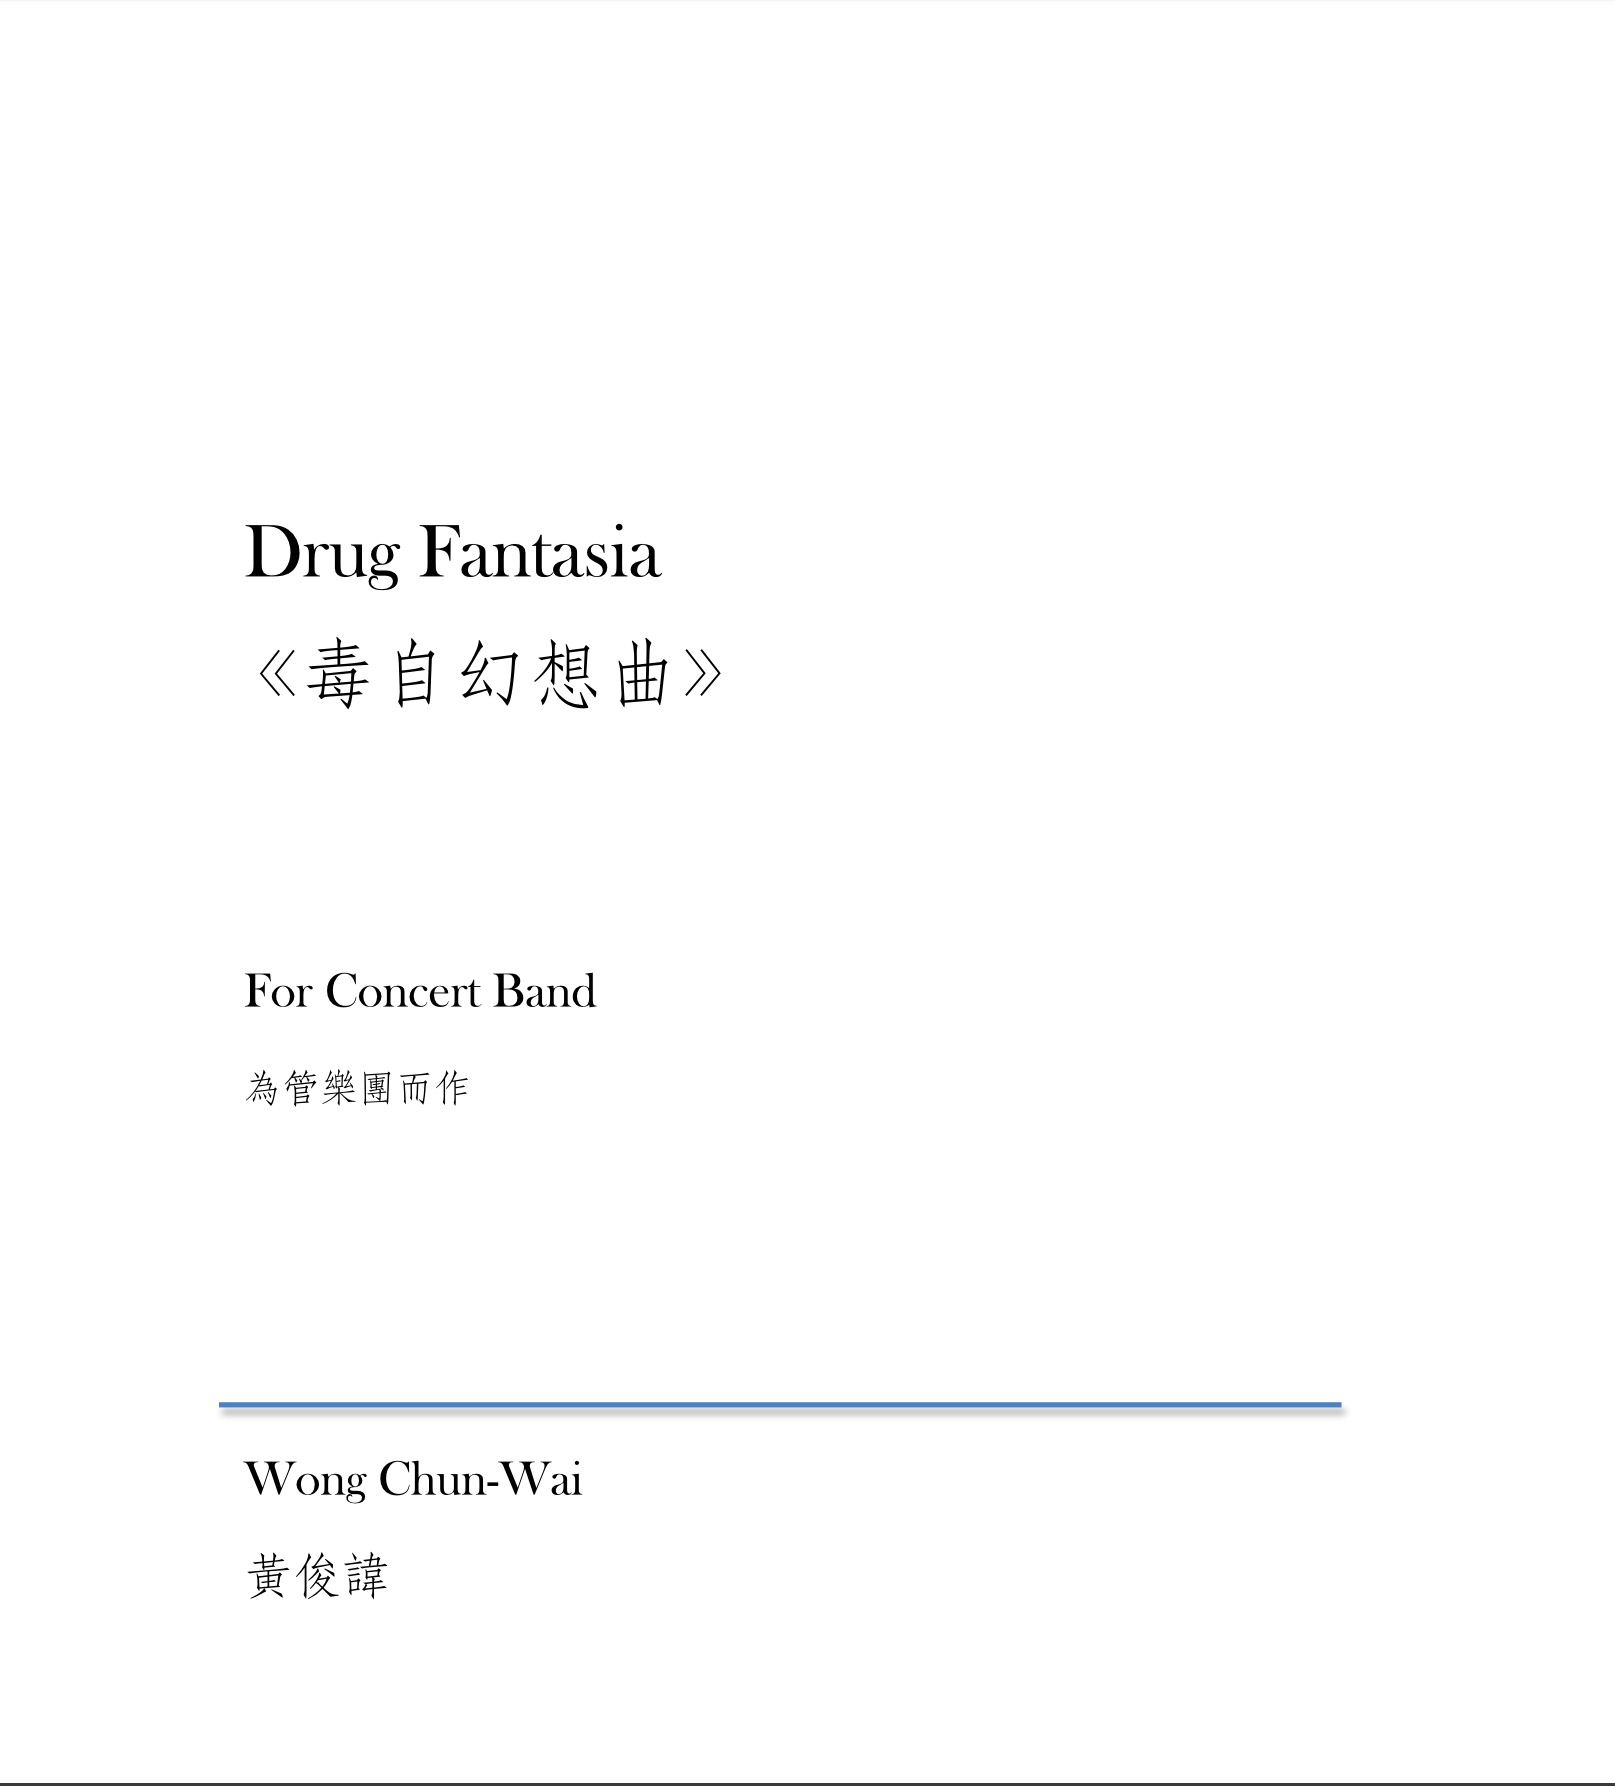 Drug Fantasia by Chun-Wai Wong 